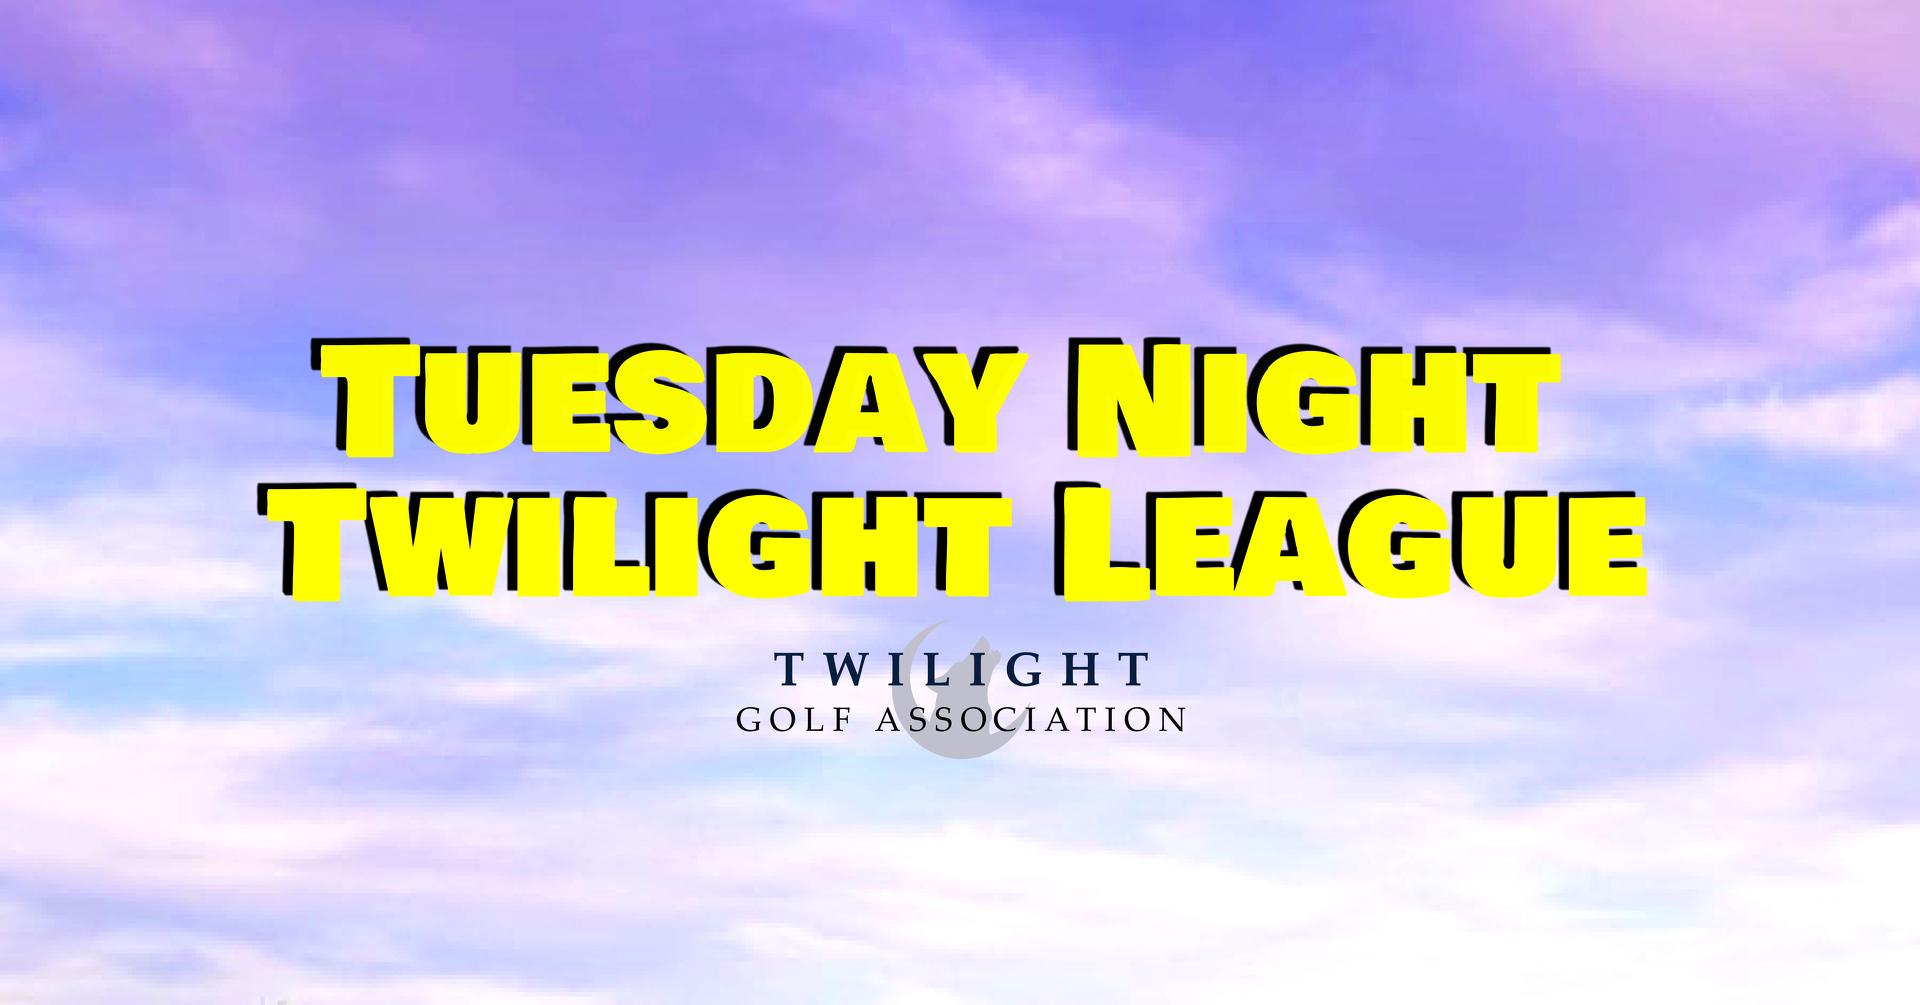 Tuesday Twilight League at DeBell Golf Club